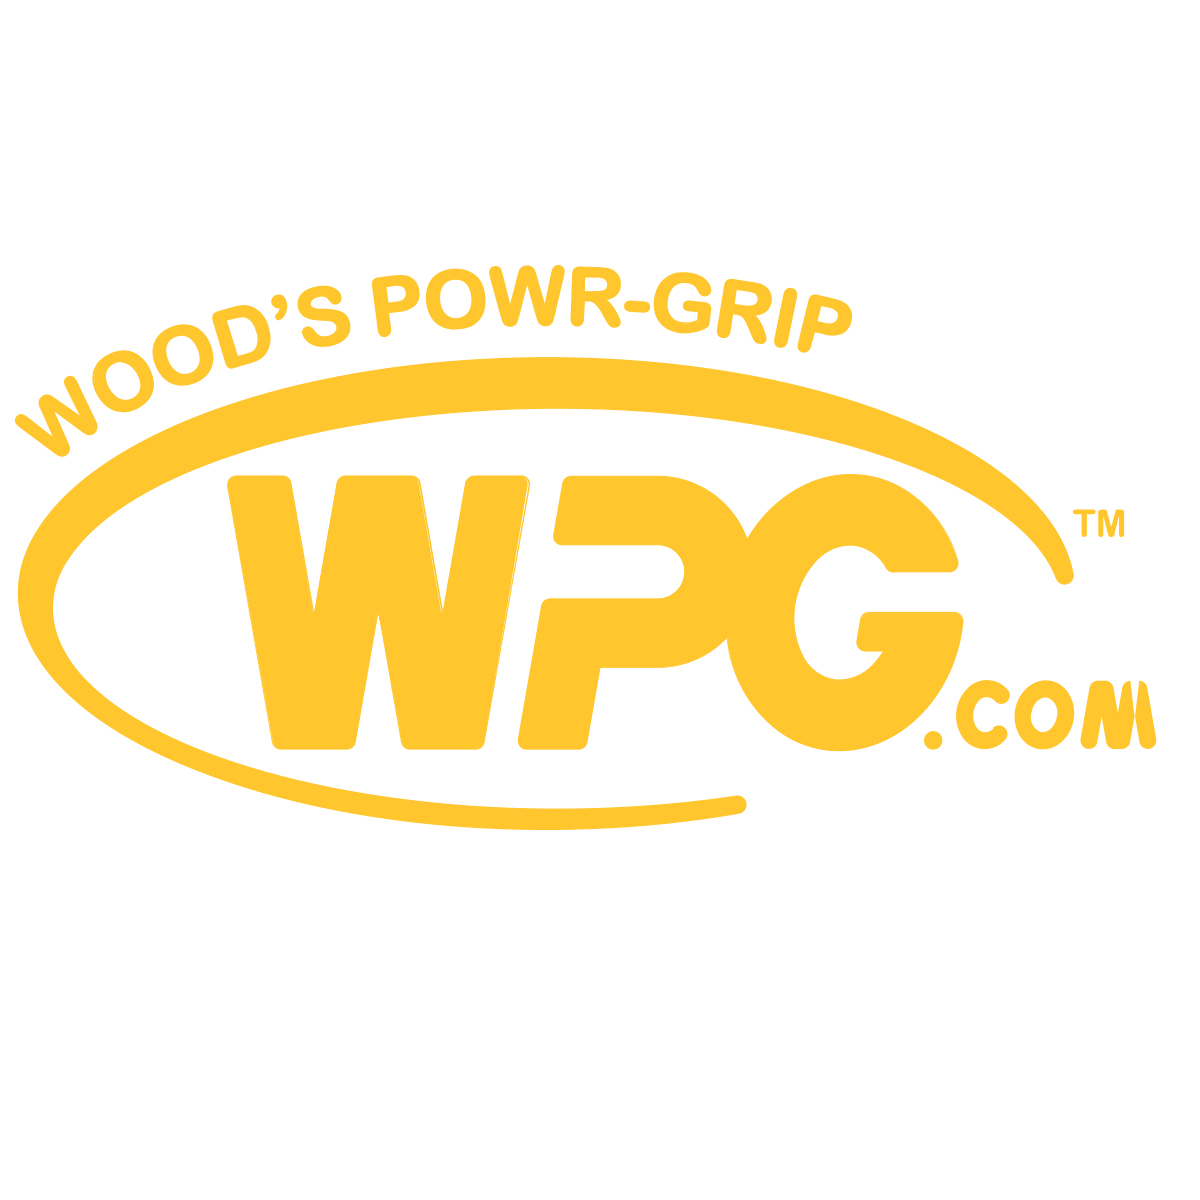 Woods Powr-Grip